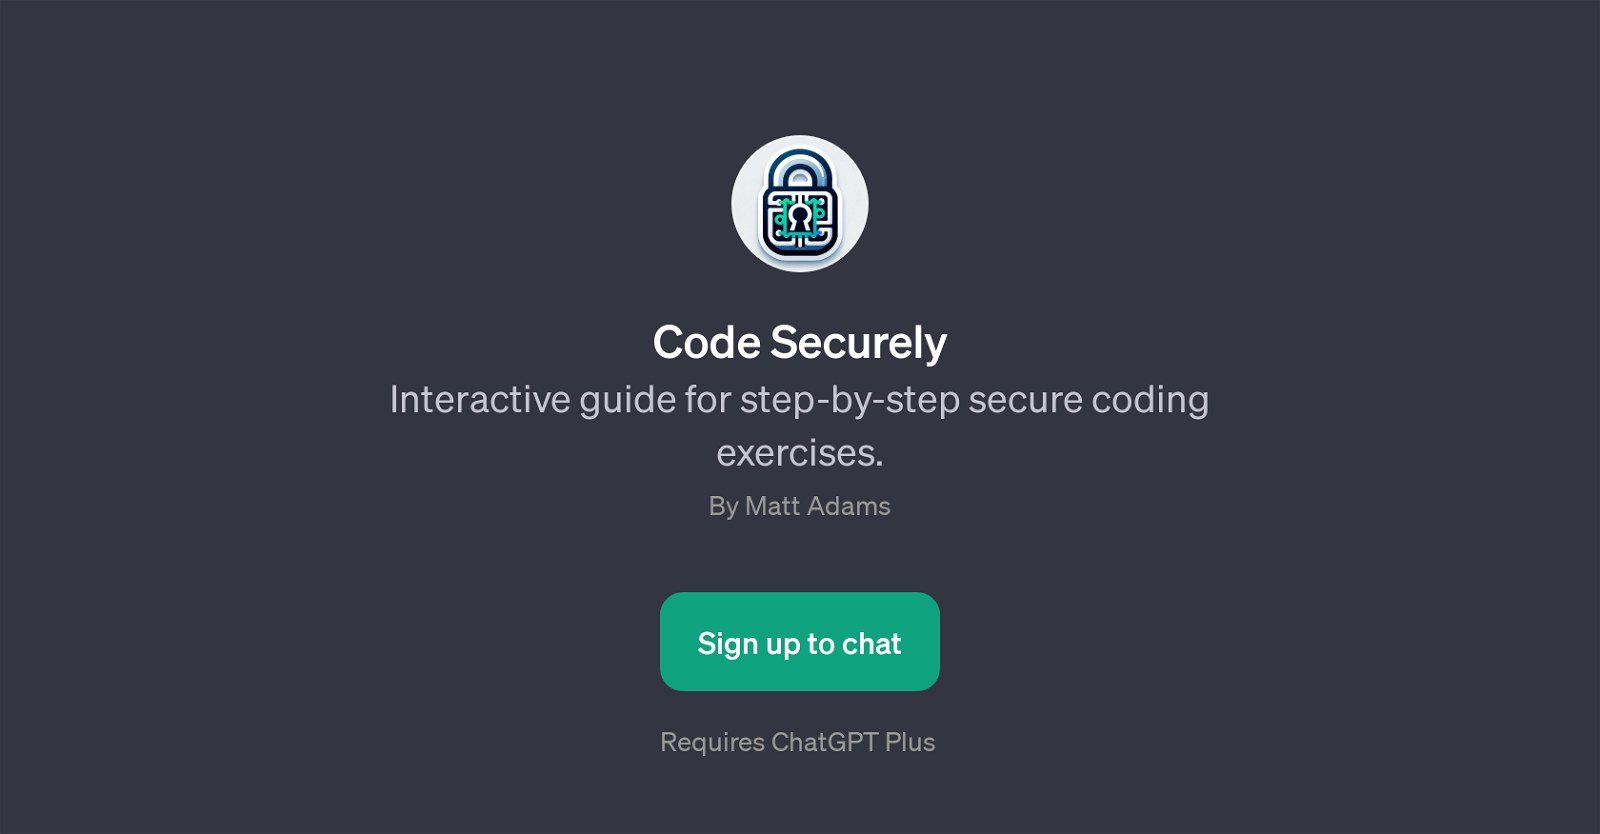 Code Securely website